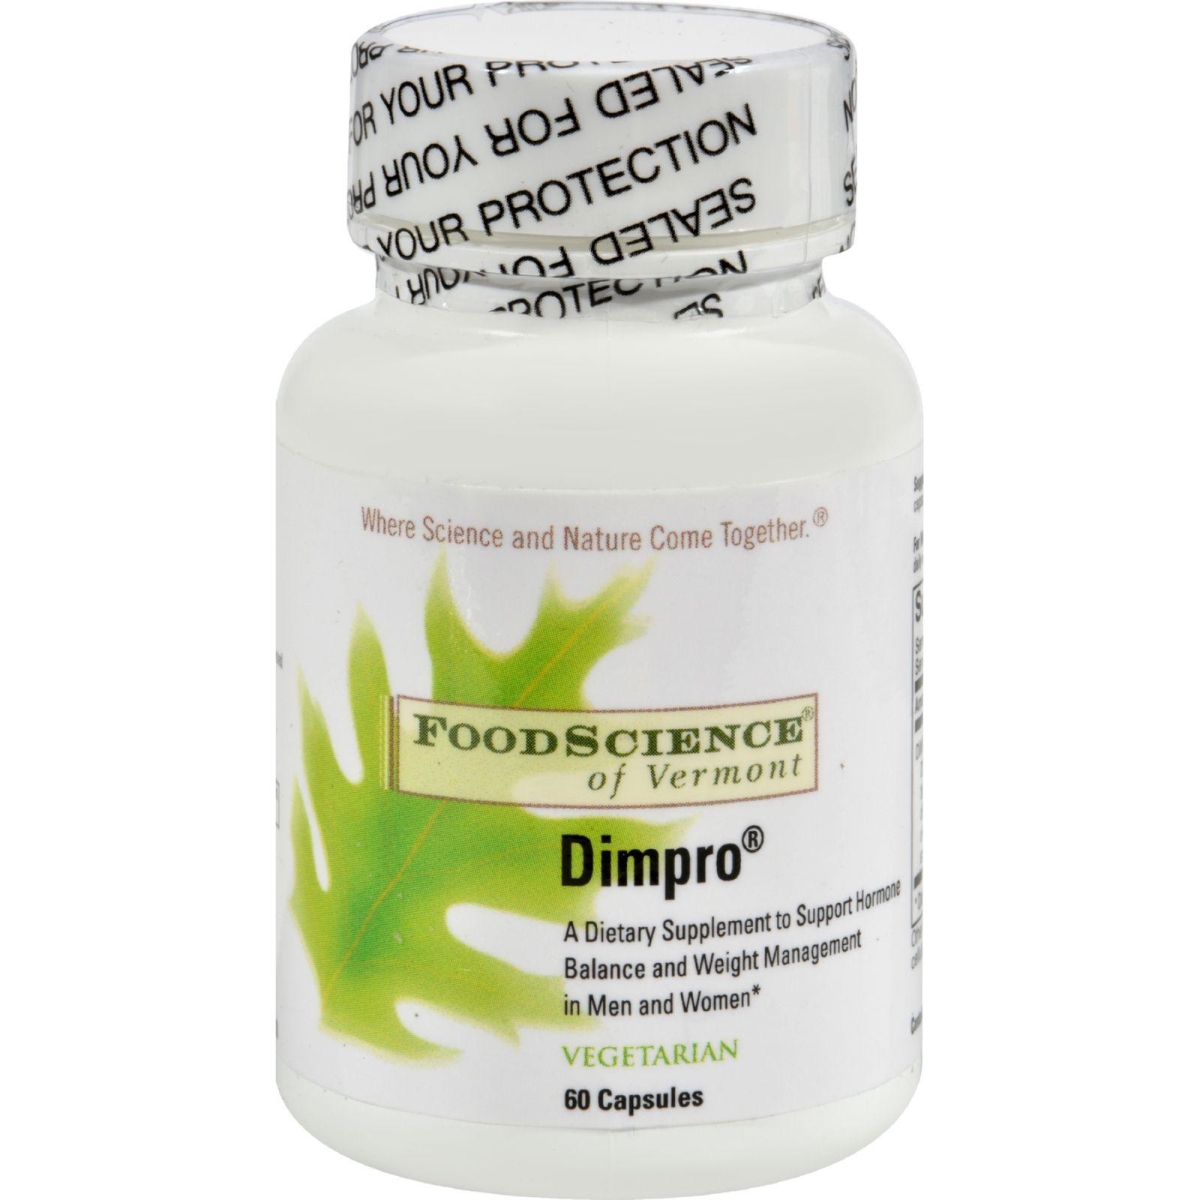 Hg0615336 Dimpro Dietary Supplement - 60 Capsules